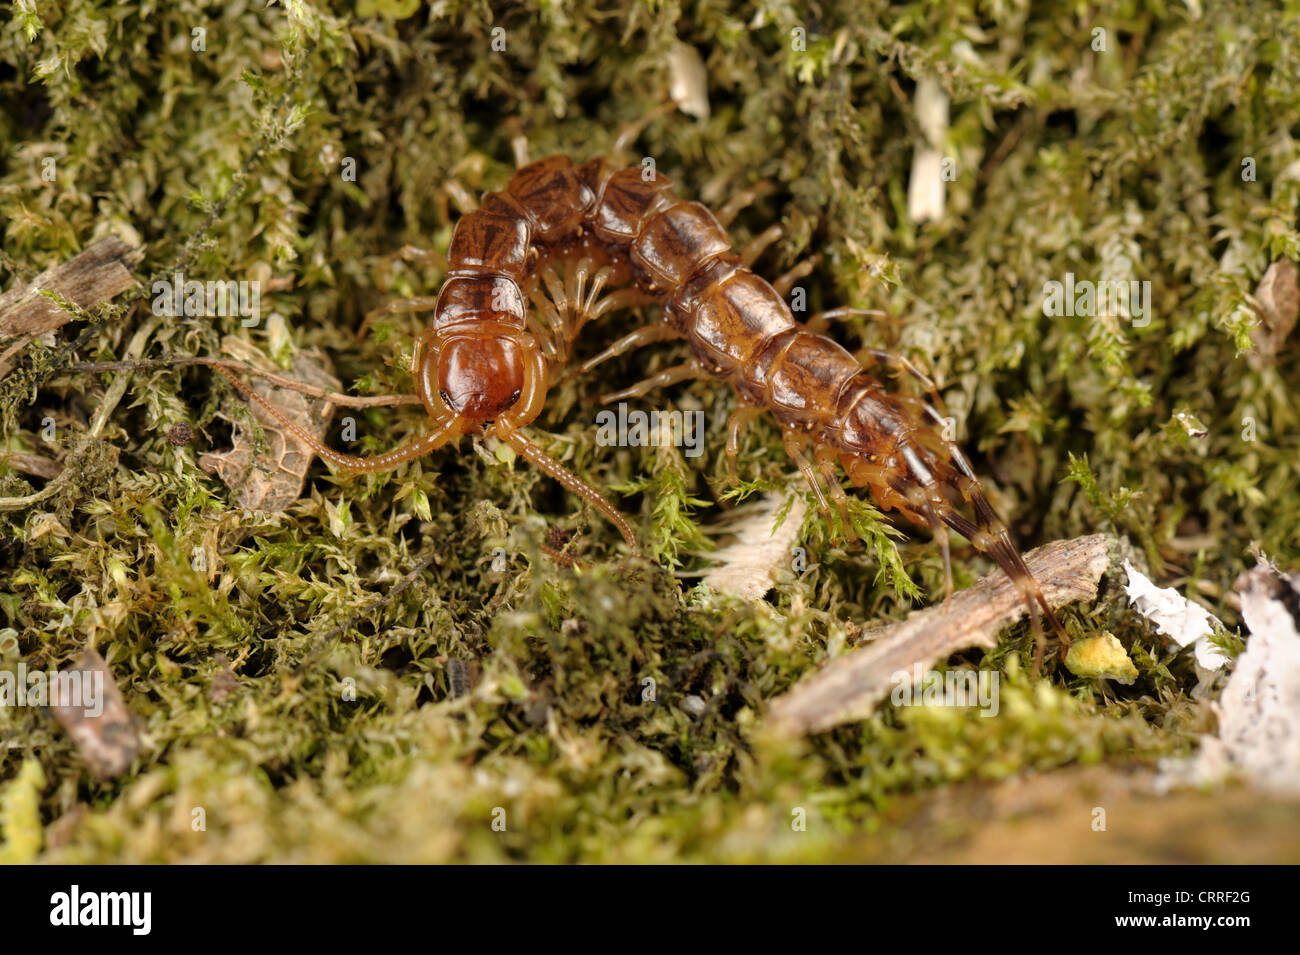 A centipede Lithobius forficatus adult Stock Photo